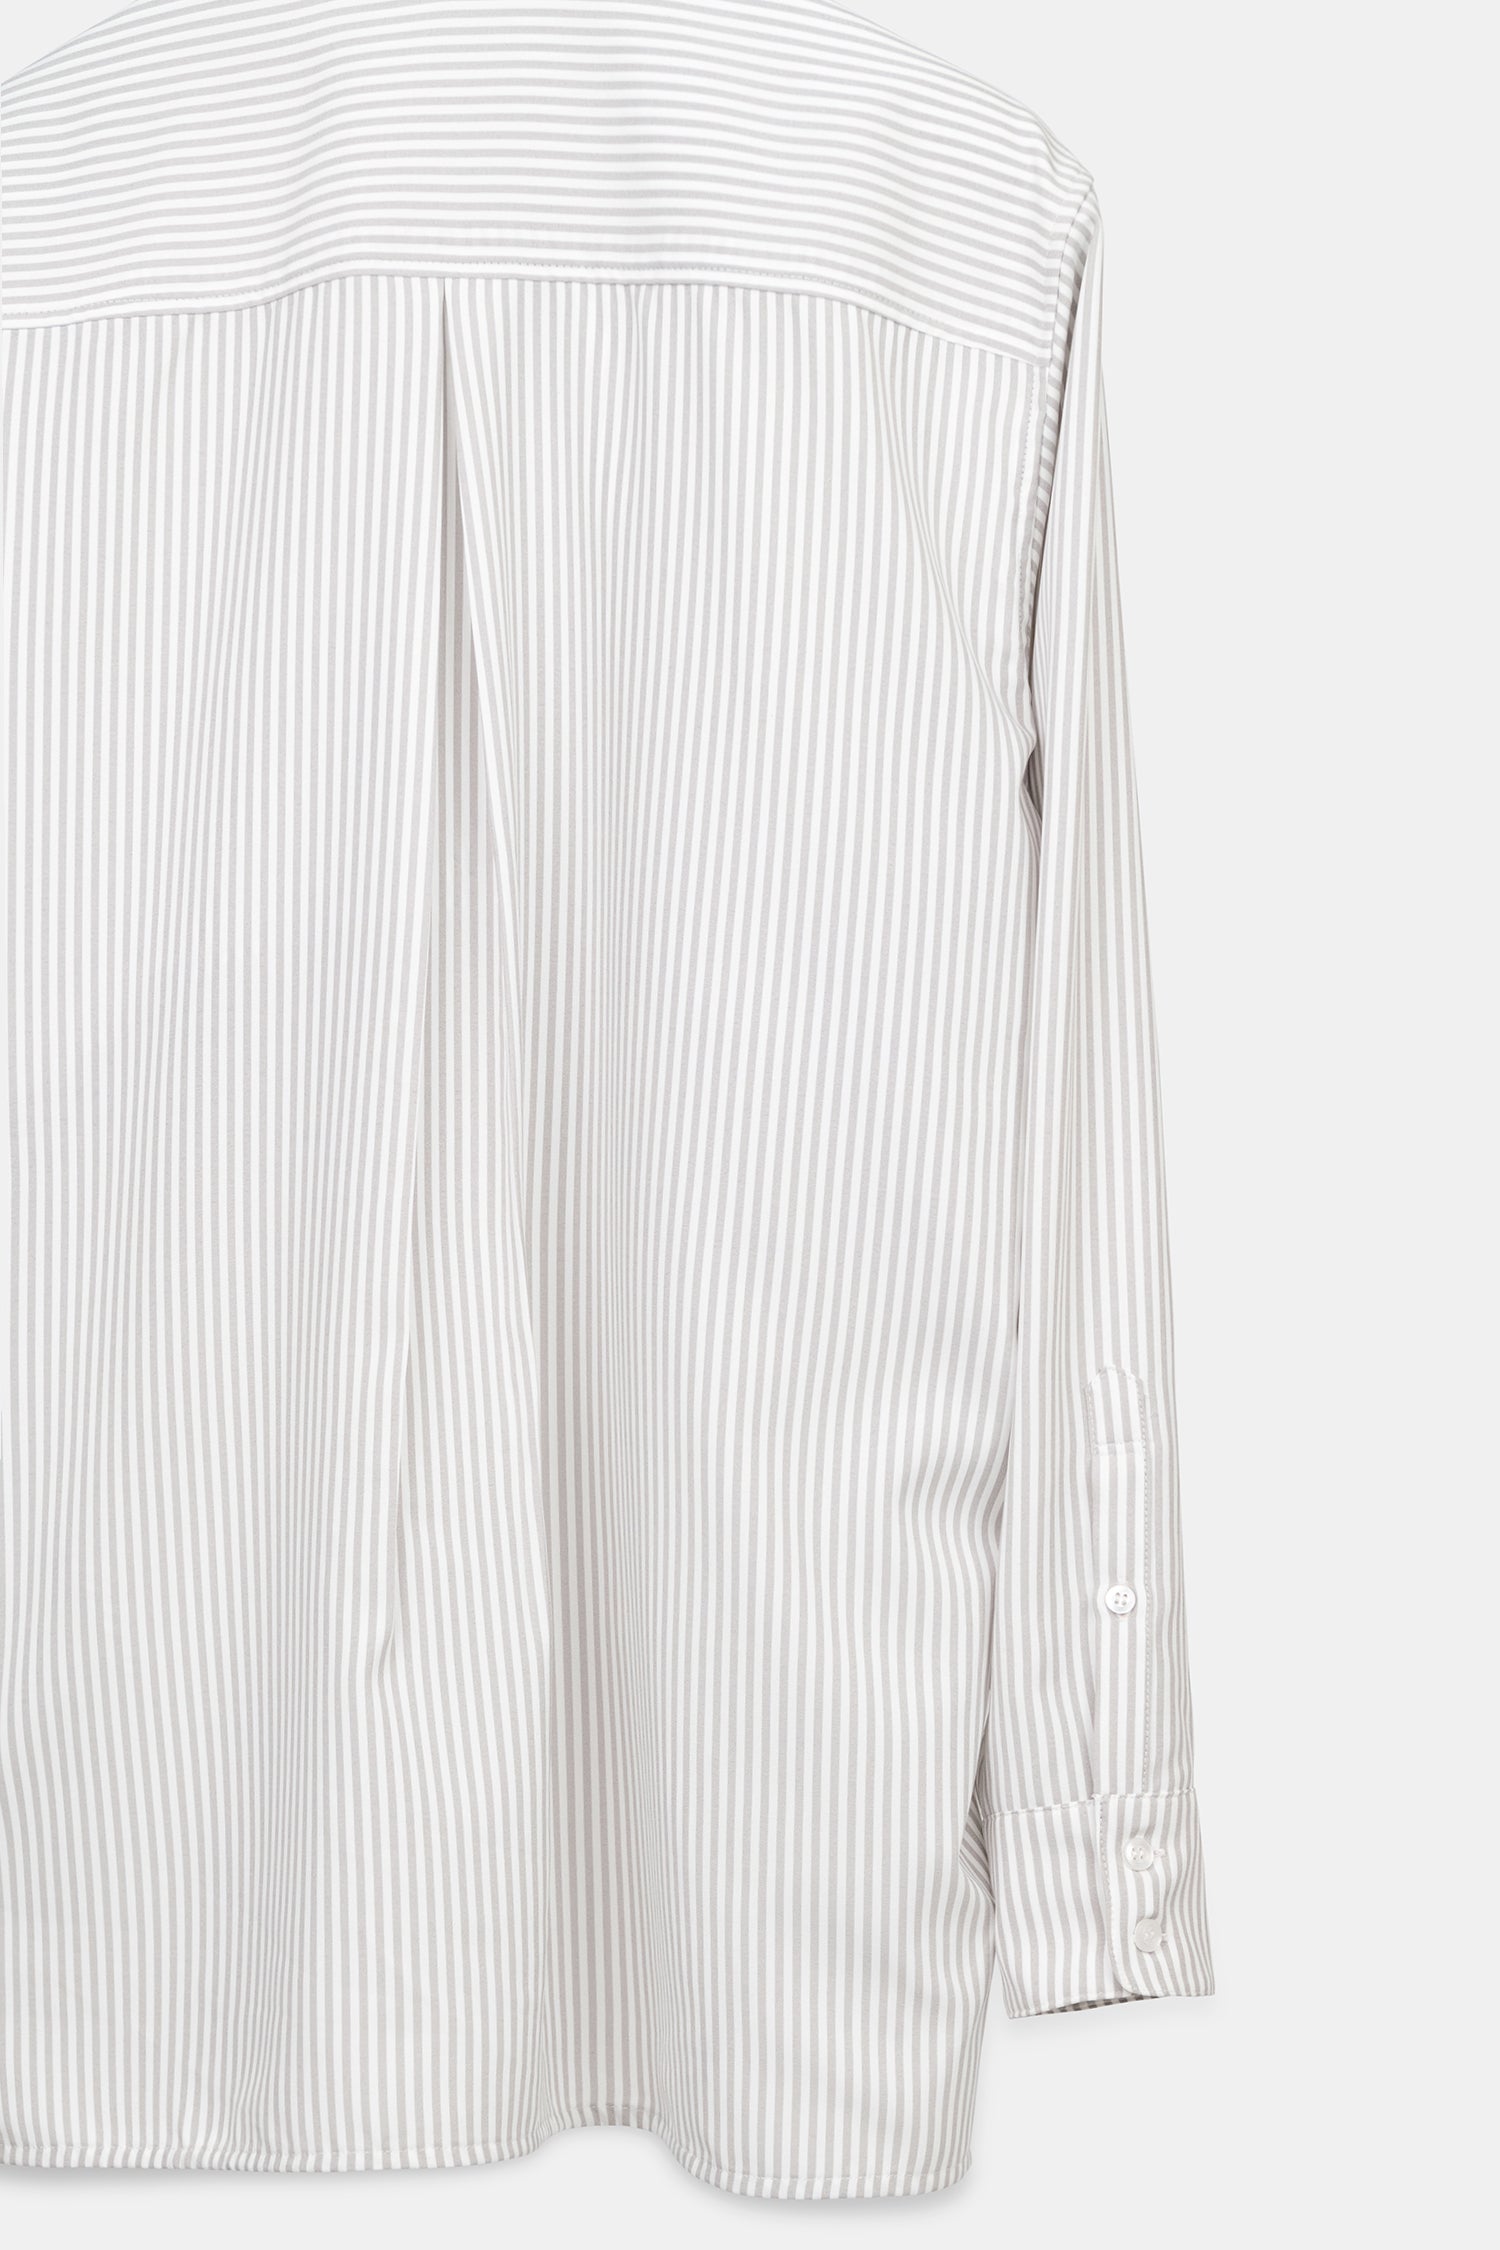 SEANNUNG - 條紋披肩襯衫 Striped Pattern Double Layered Shoulder Detail Shirt- Women